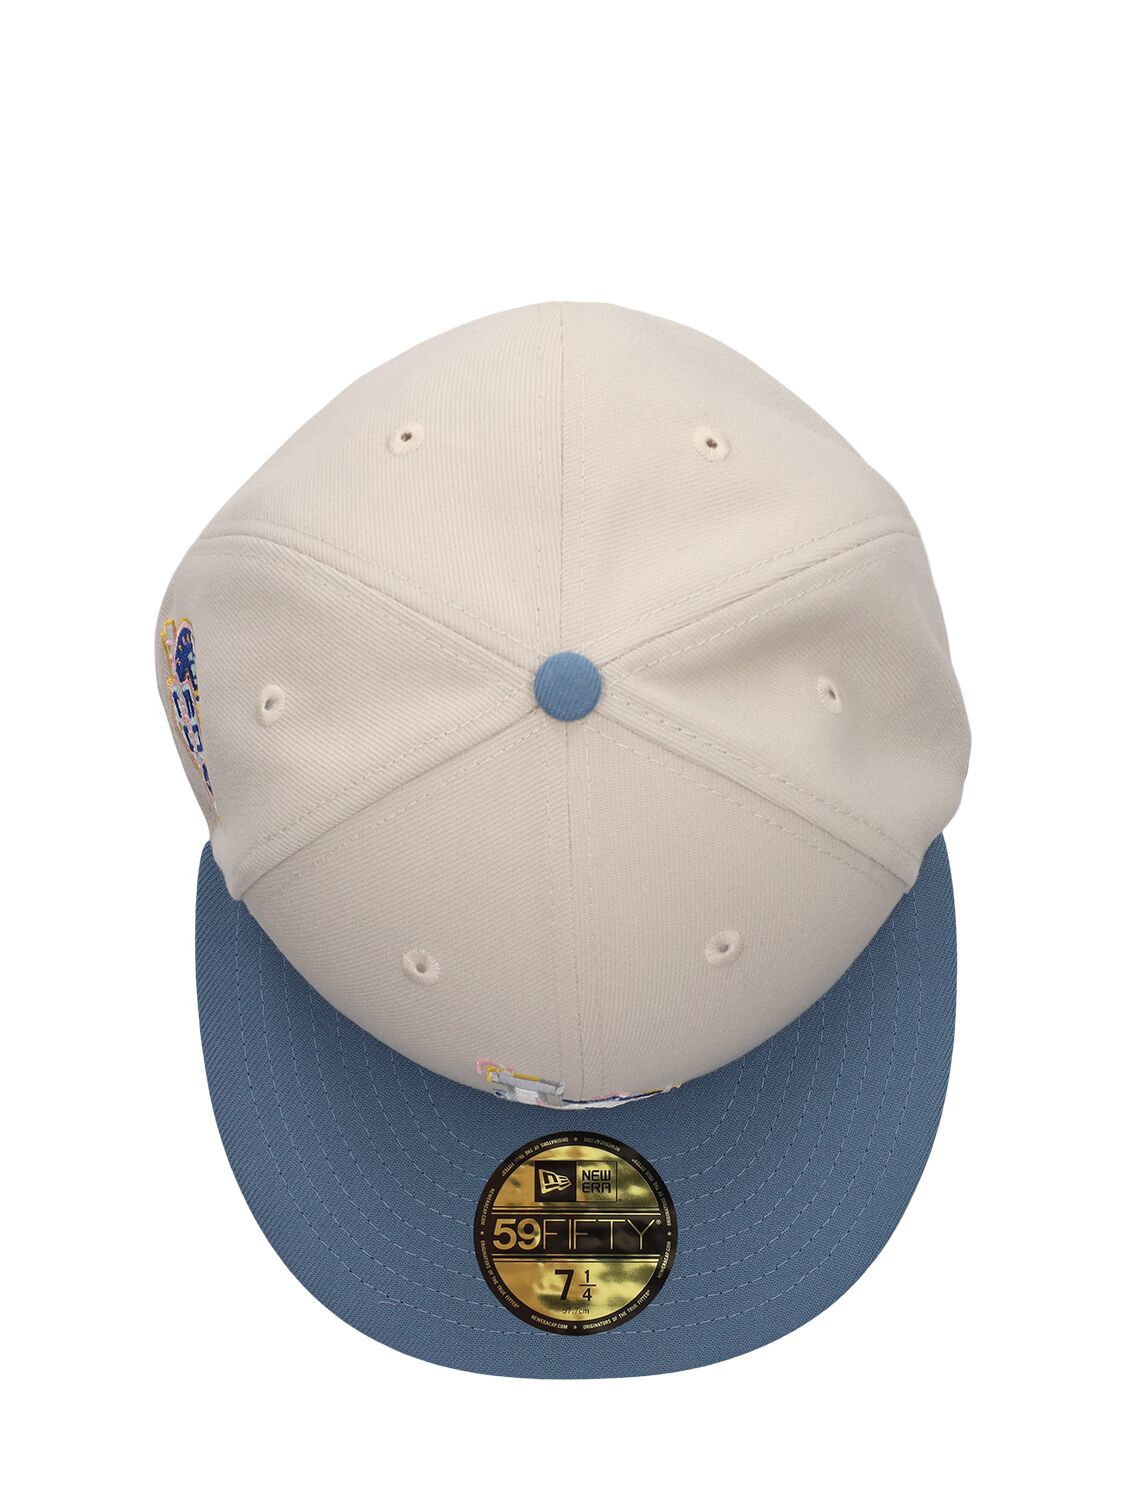 COLOR BRUSH LA DODGERS 59FIFTY棒球帽